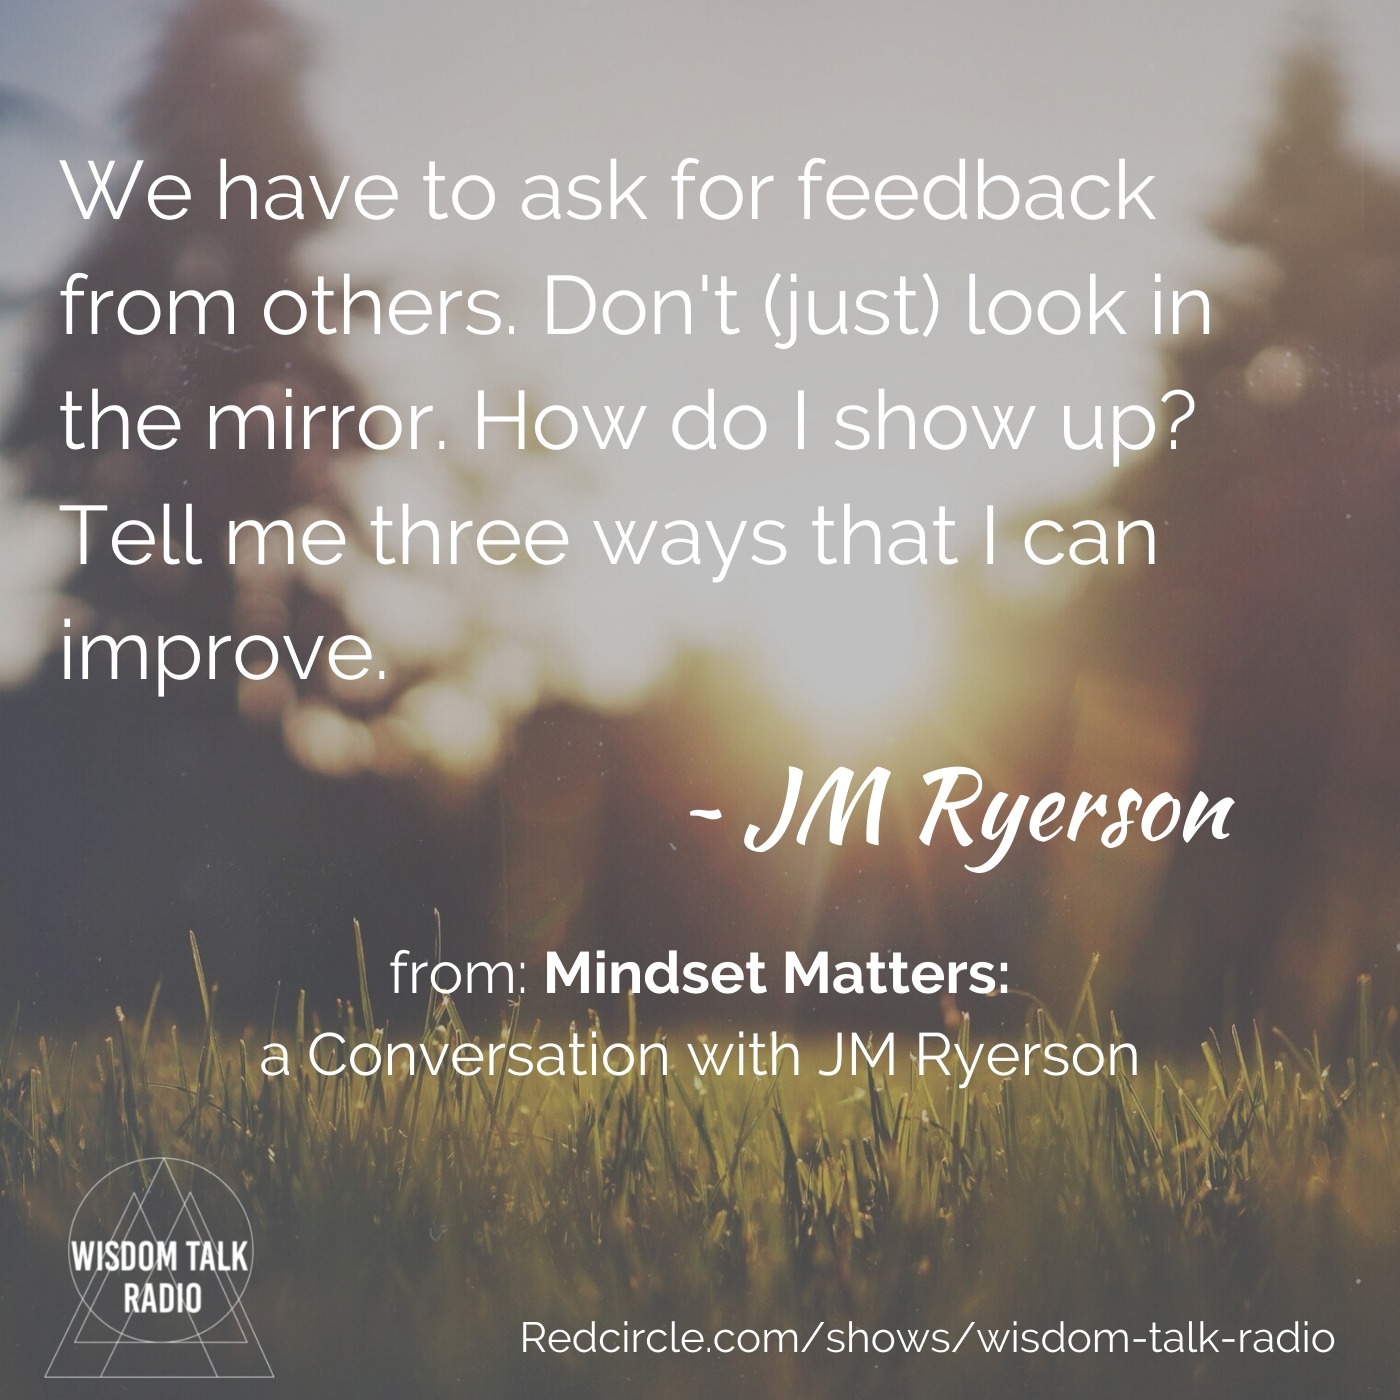 Mindset Matters, a conversation about leadership with JM Ryerson